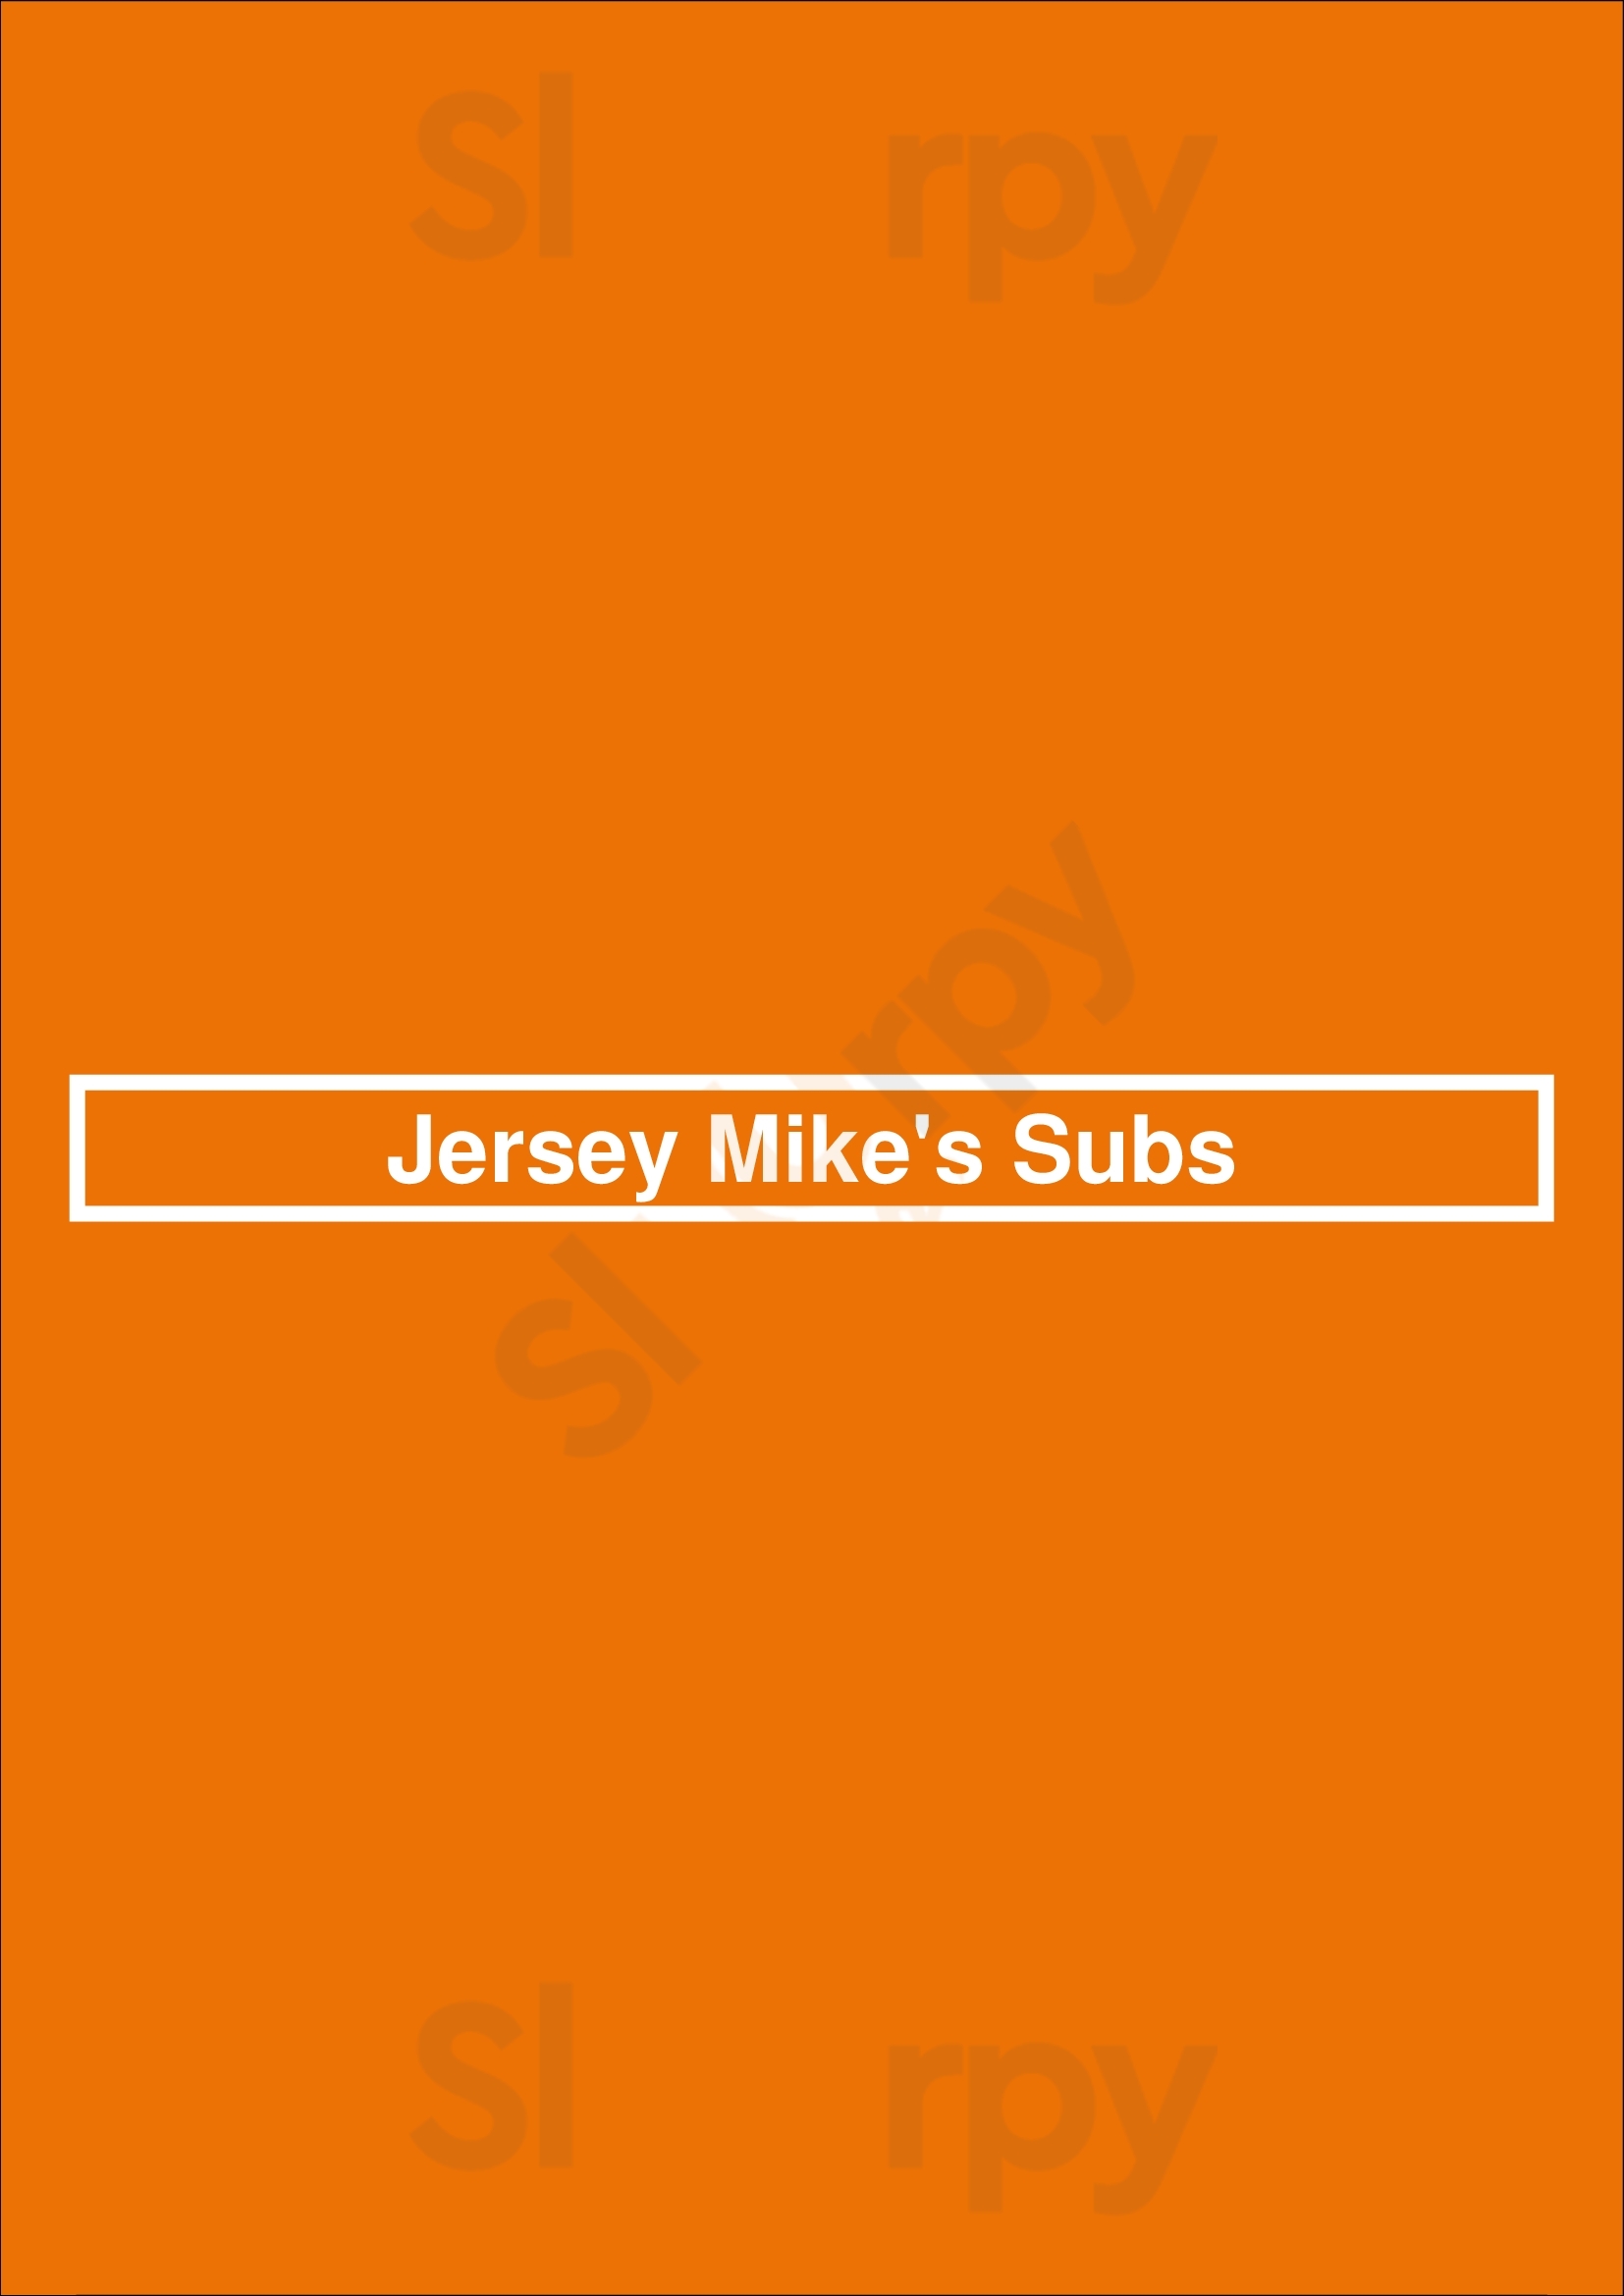 Jersey Mike's Subs Minneapolis Menu - 1